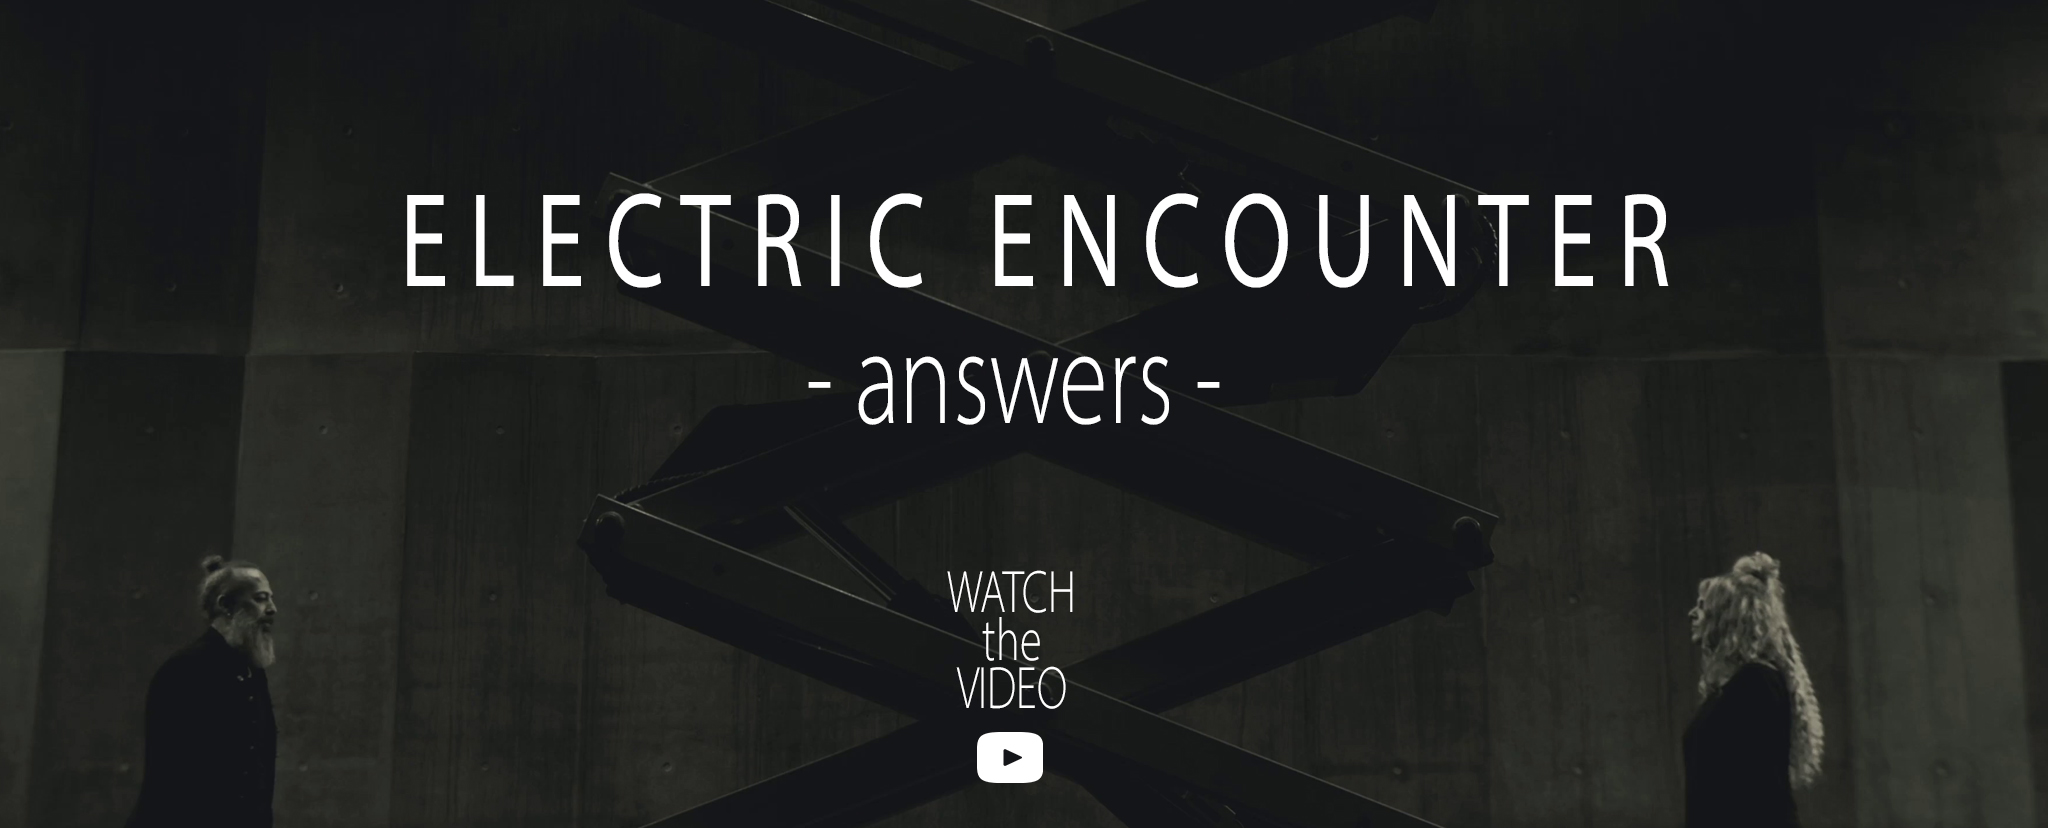 Electric Encounter